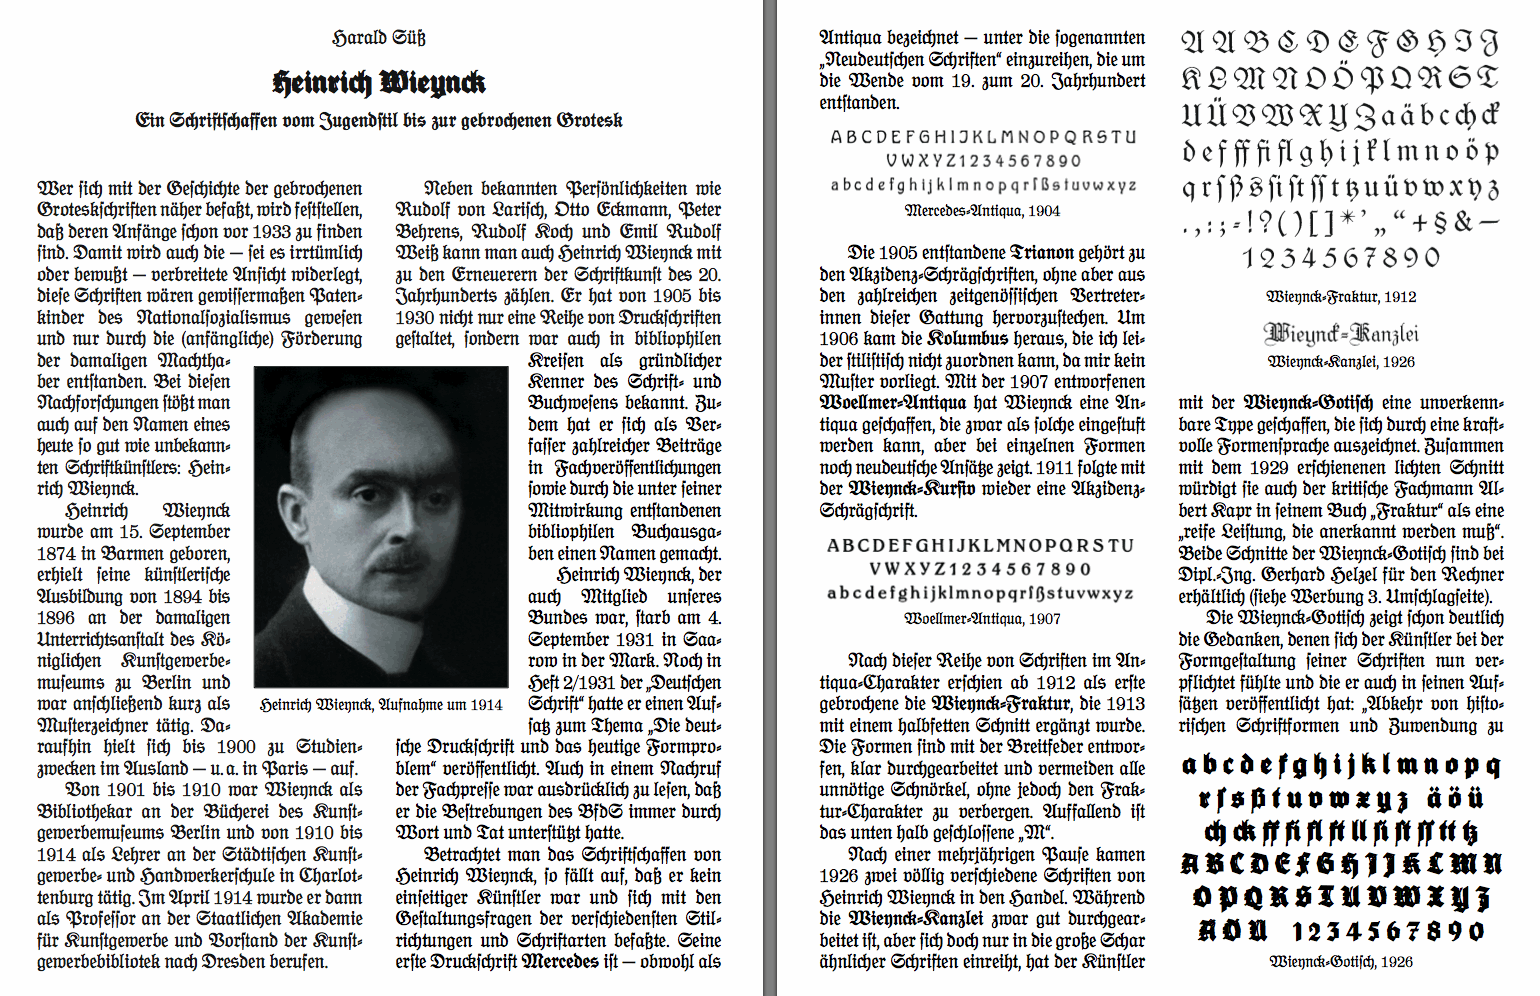 HeinrichWieynck-Biography-ByHaraldSuess-